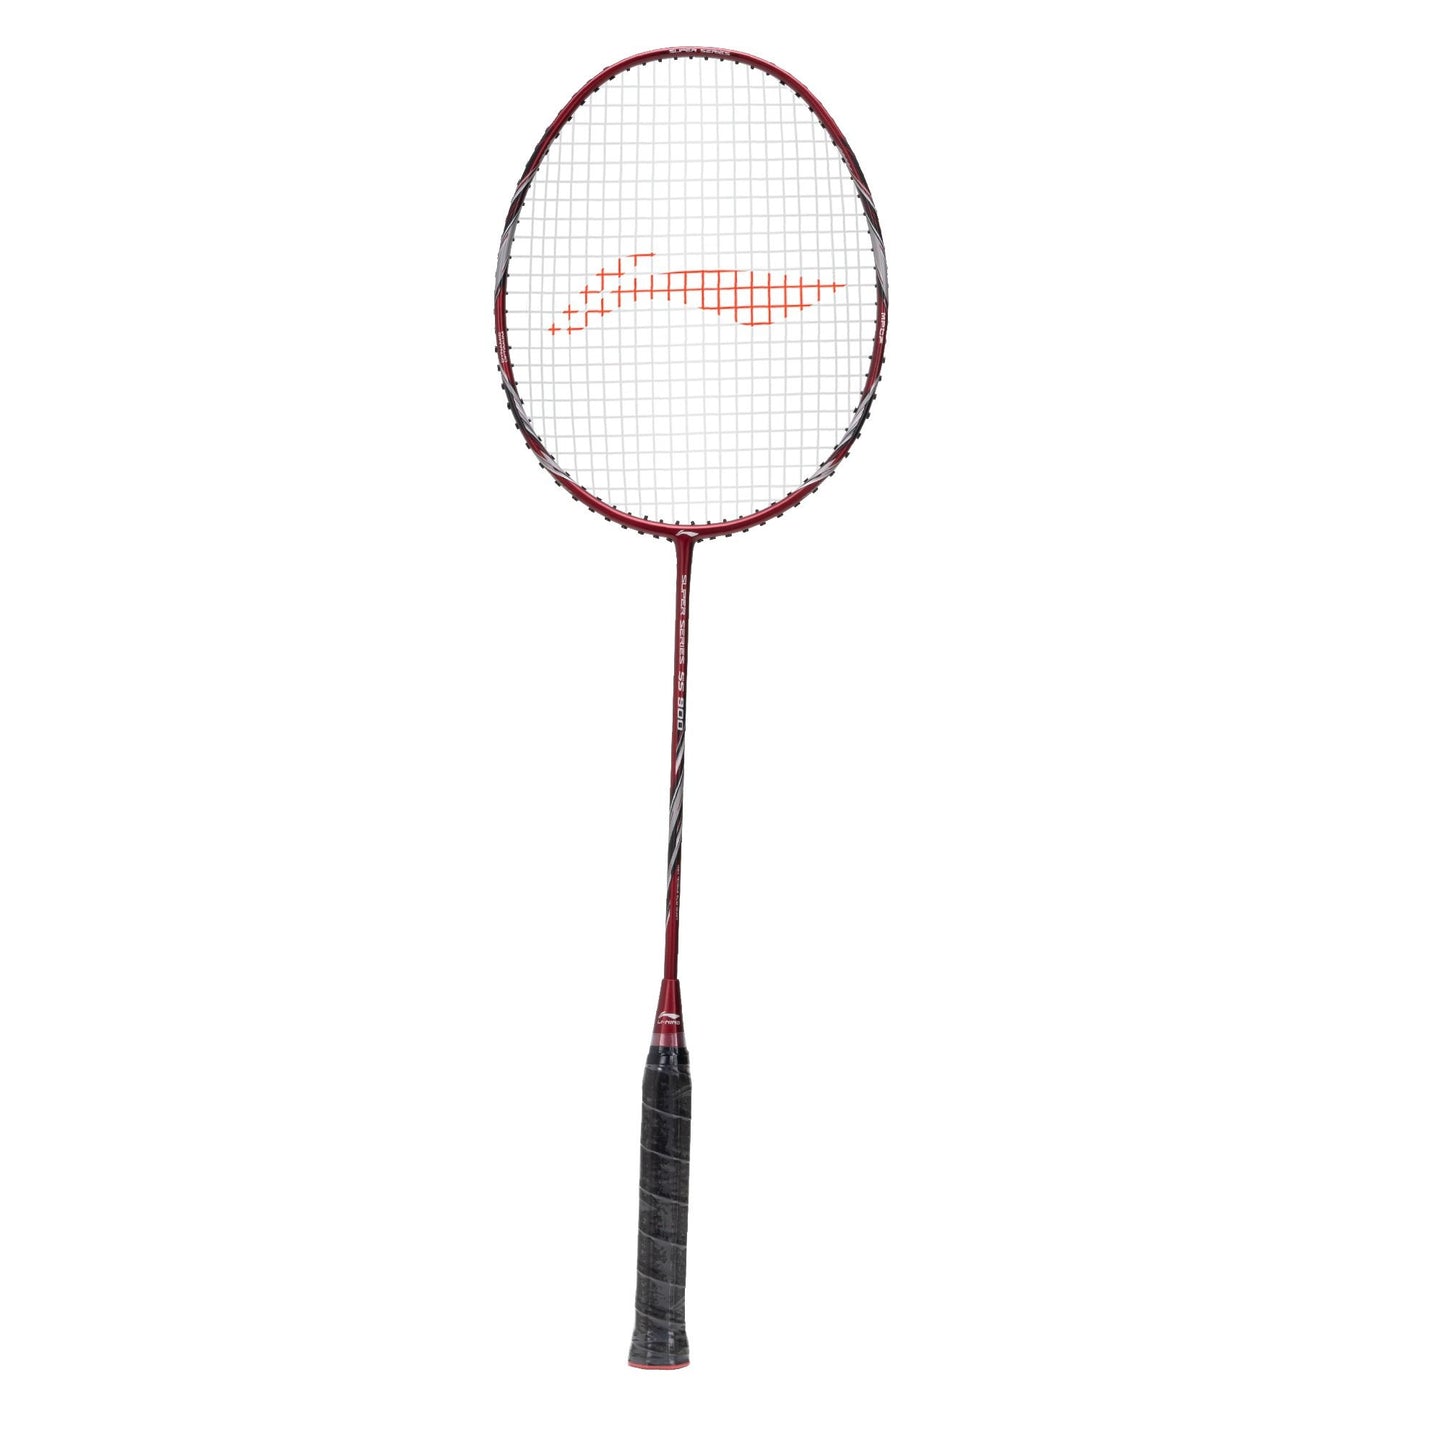 Li-Ning Super Series SS 900 (Red/Grey) Badminton Racket